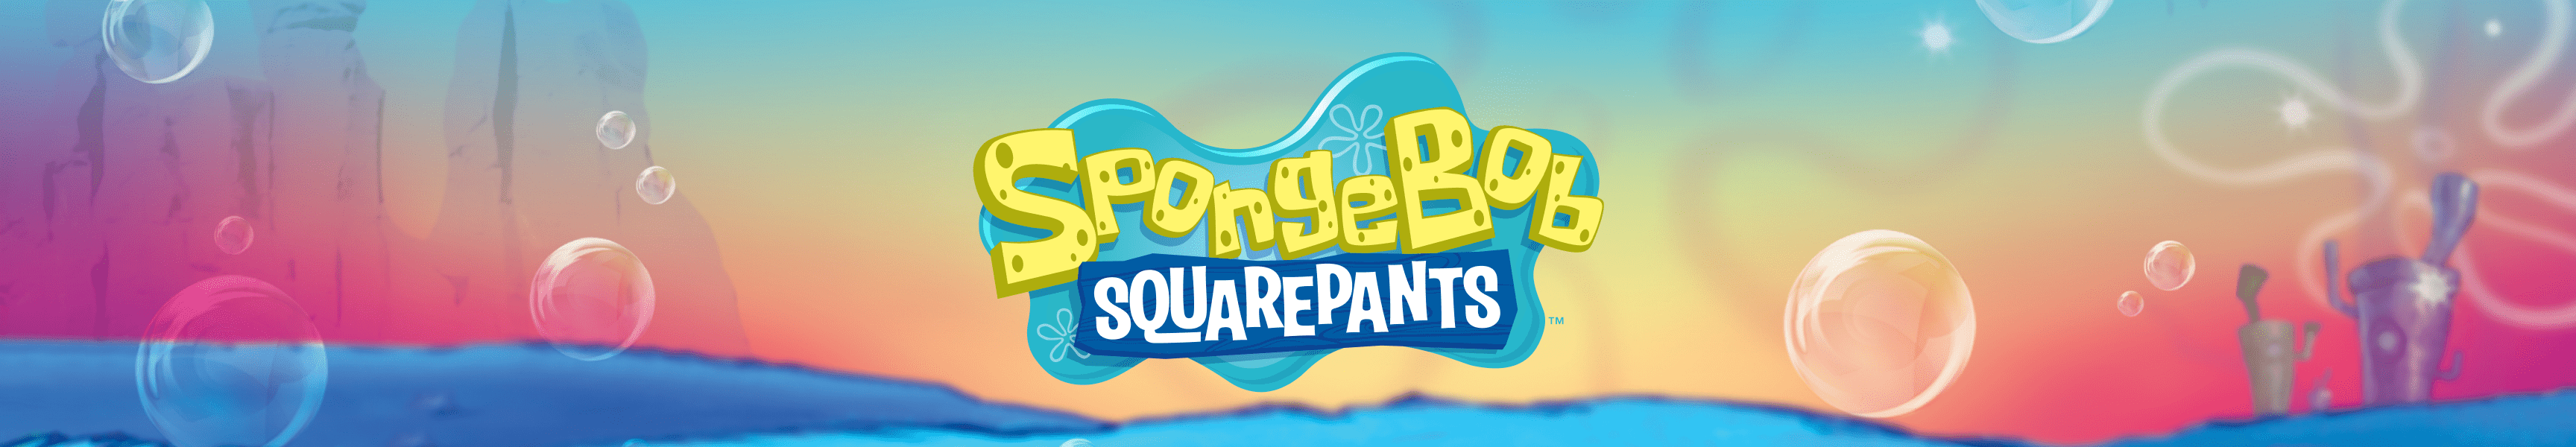 SpongeBob SquarePants Gifts for Her